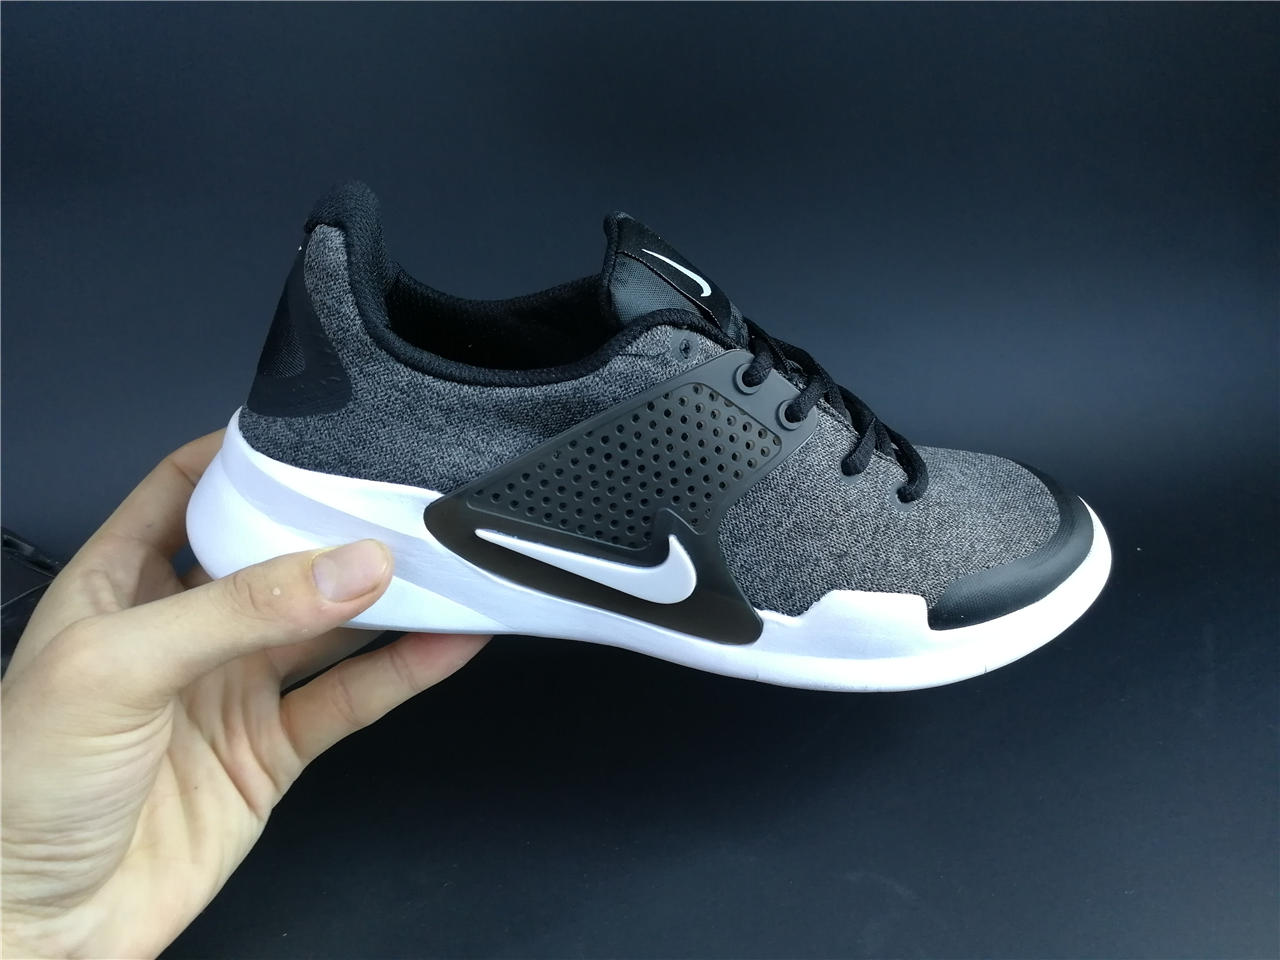 New Nike Air Presto IV Mesh Grey Black White